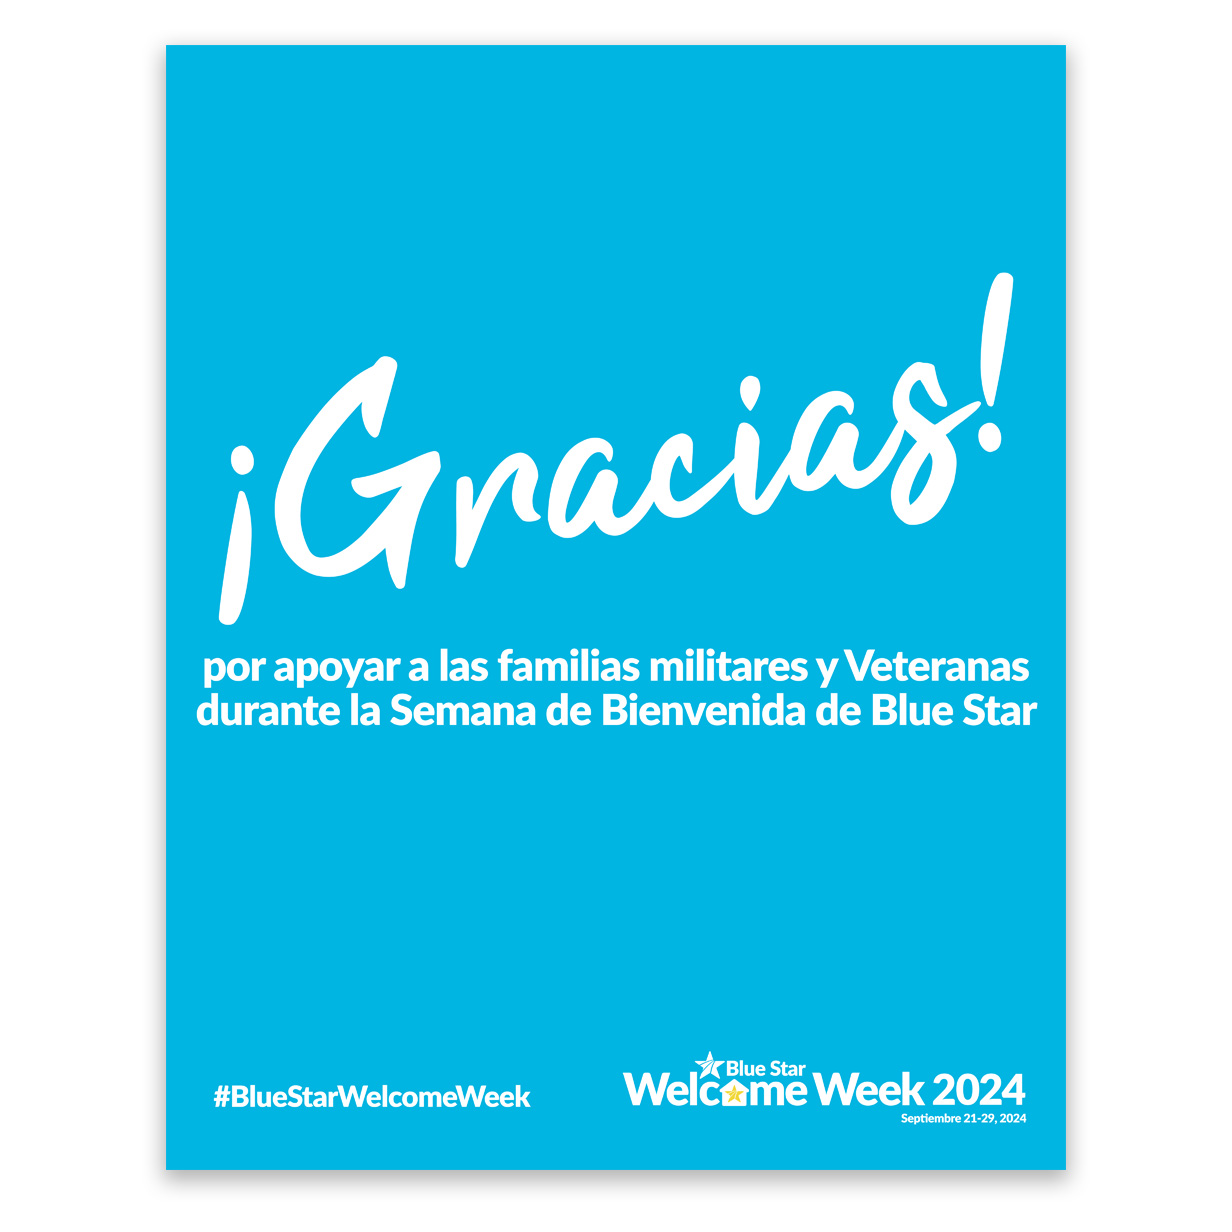 BSWW24_Thumb_igfb-gracias-spanish